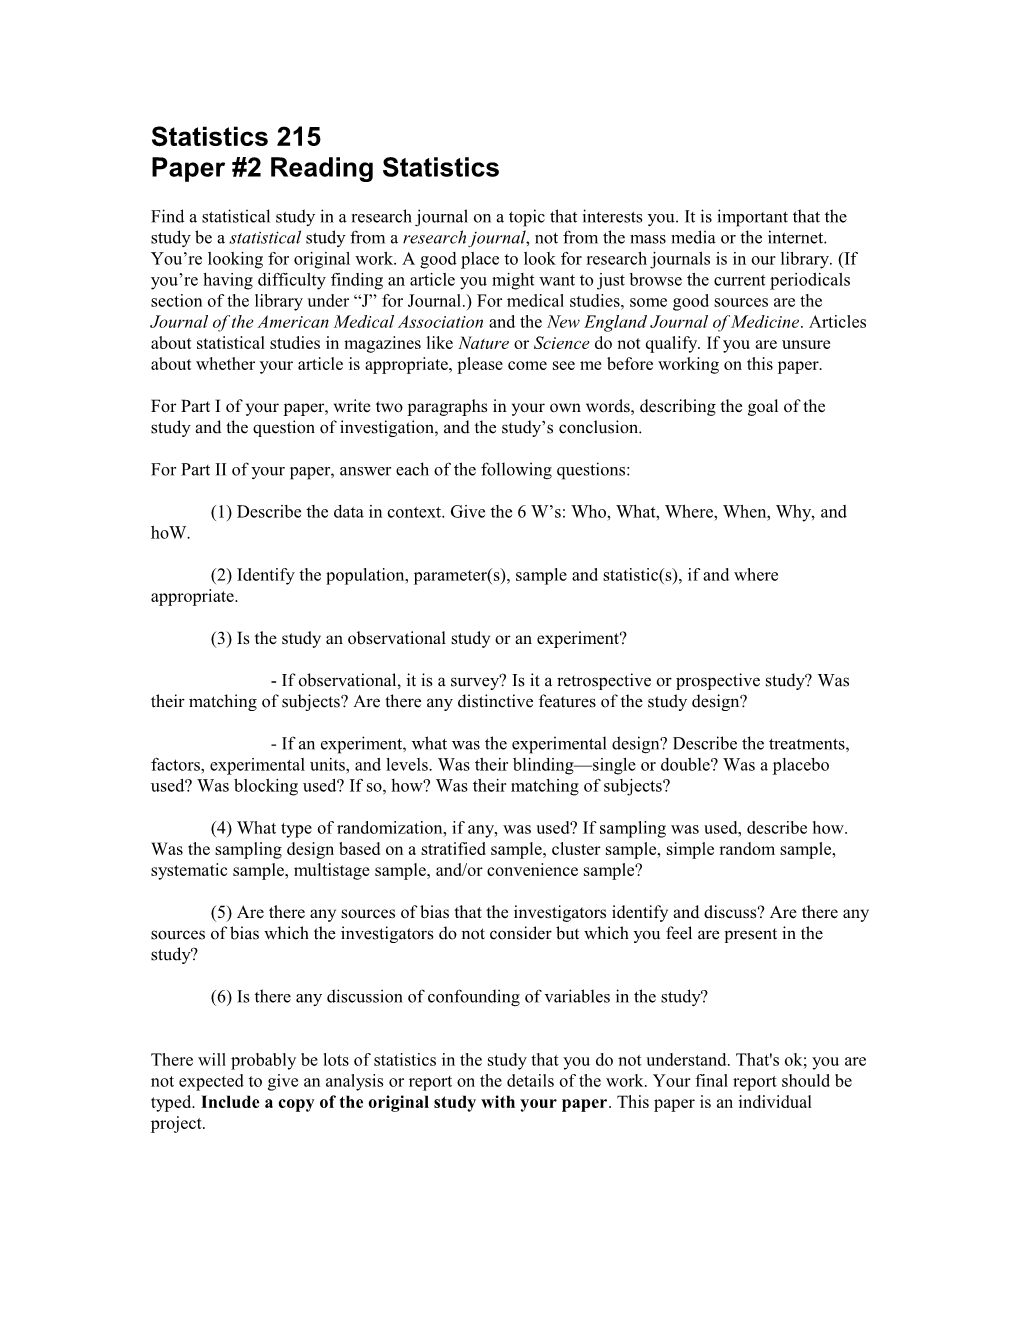 Paper #2 Reading Statistics